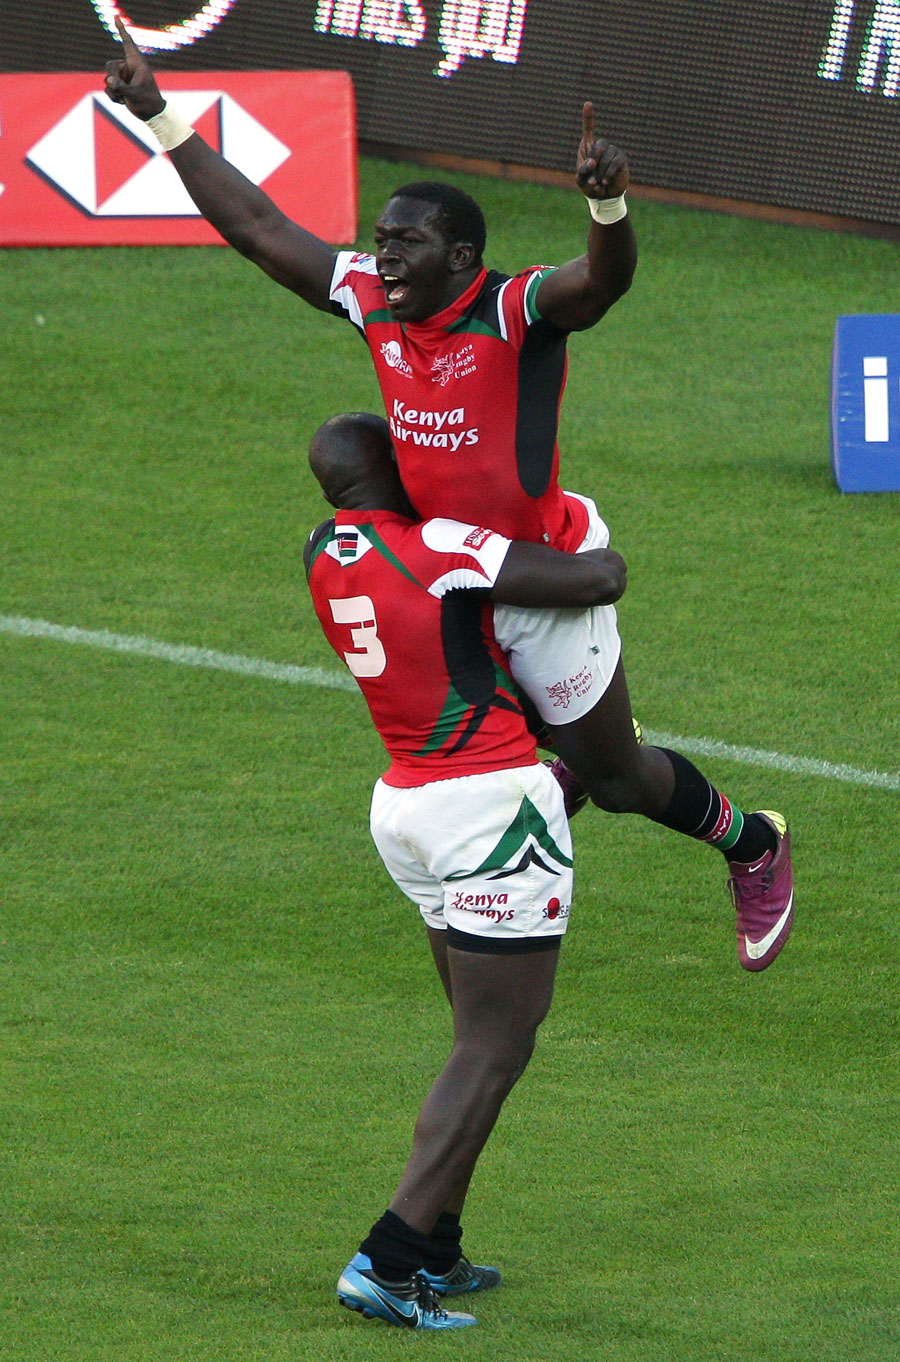 Kenya's Willy Ambaka delights in scoring against New Zealand